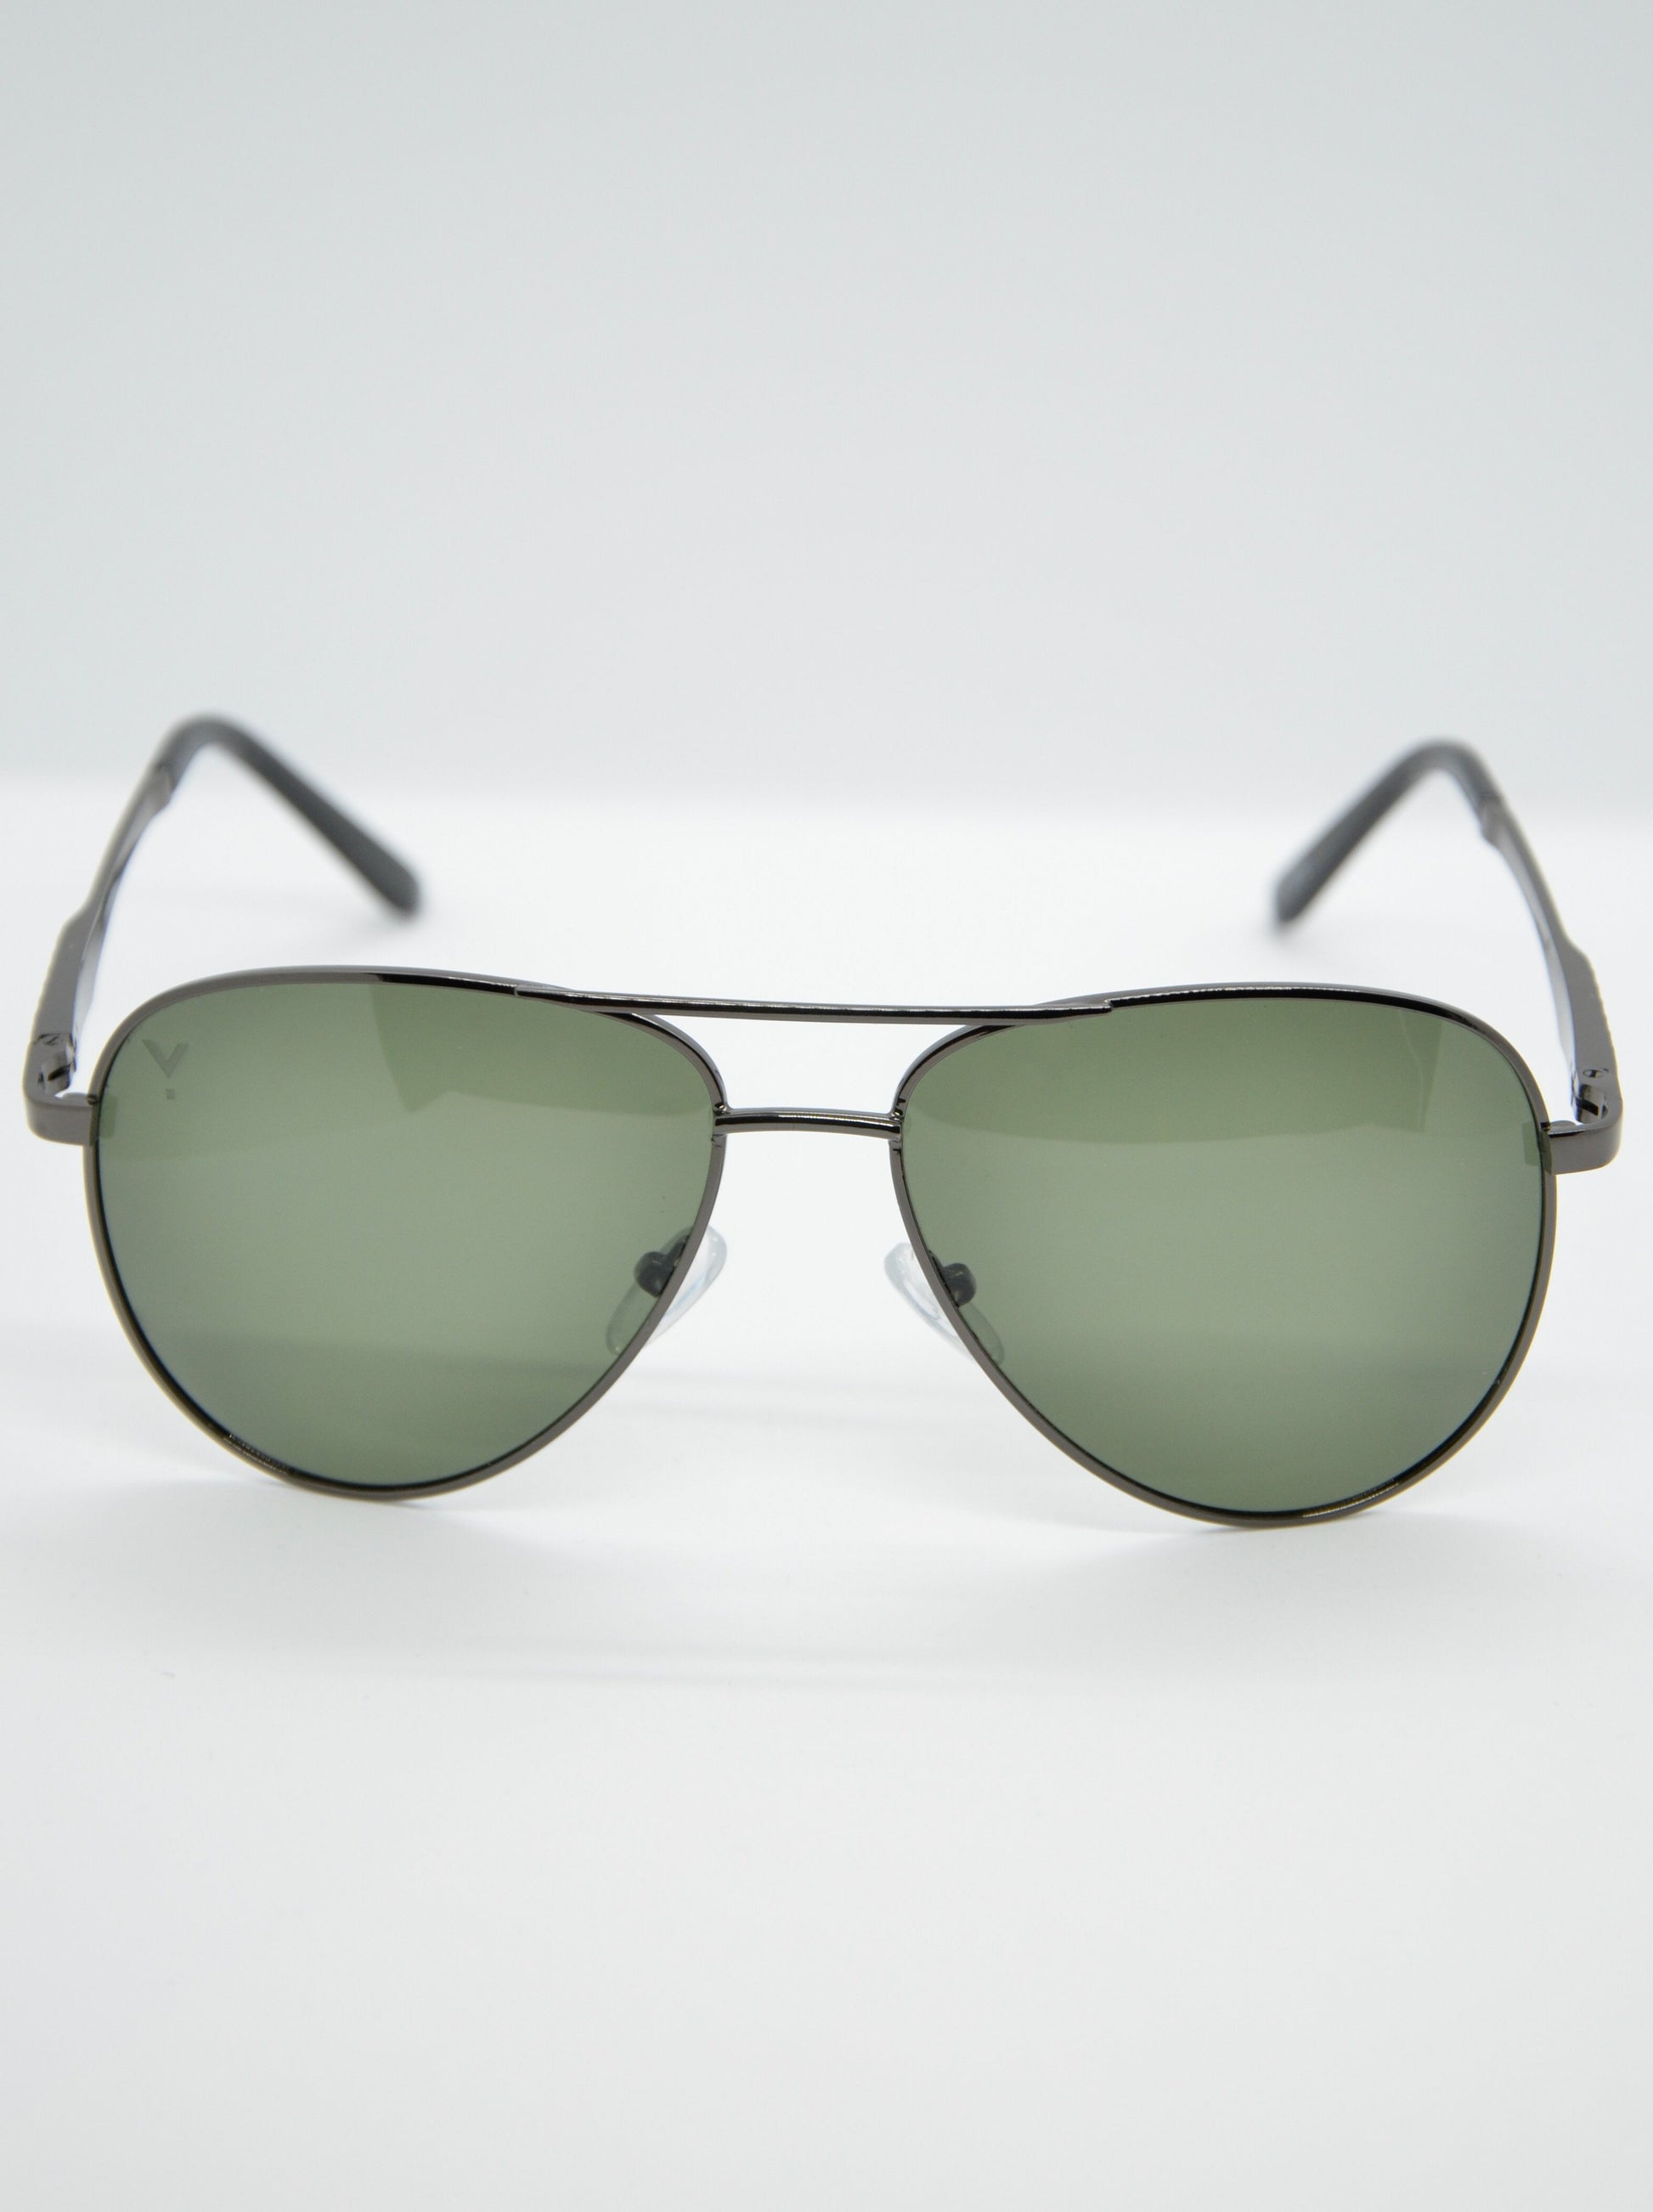 Array - Sunglasses | AVAYOS